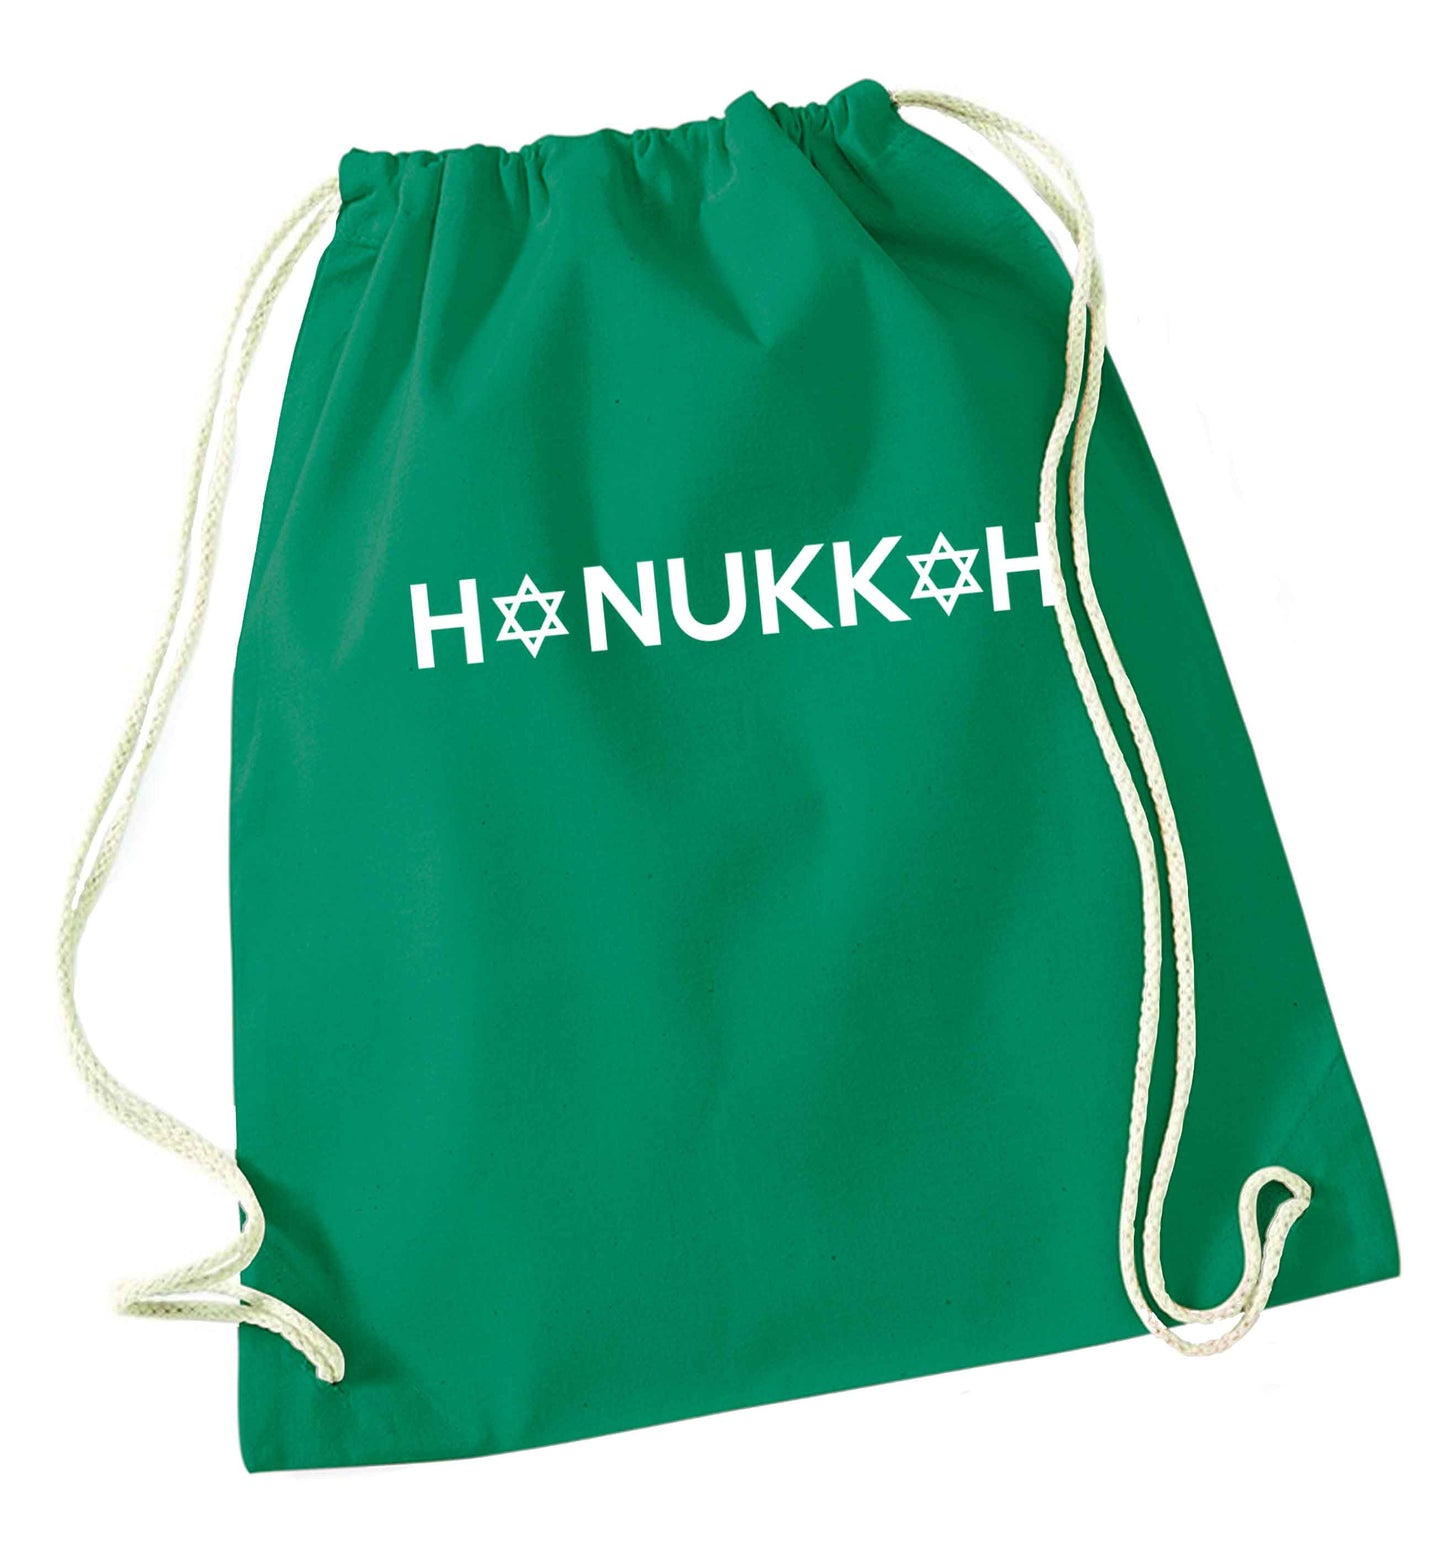 Hanukkah star of david green drawstring bag